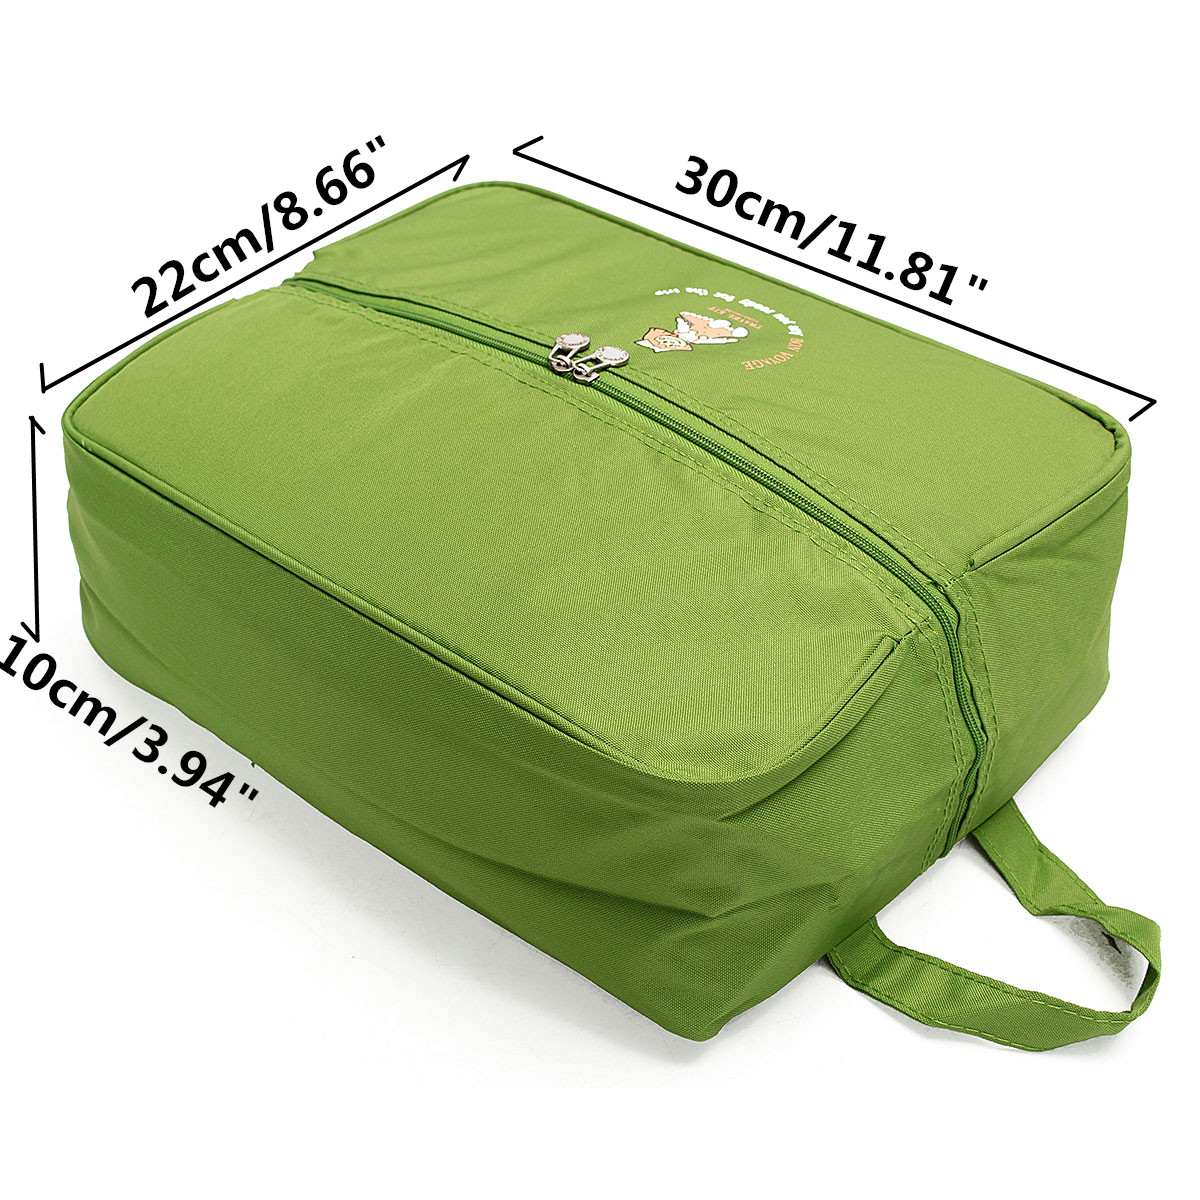 Portable-Nylon-Travel-Storage-Bag-Pouch-Bag-Case-Luggage-Cosmetic-Organizer-1460329-1